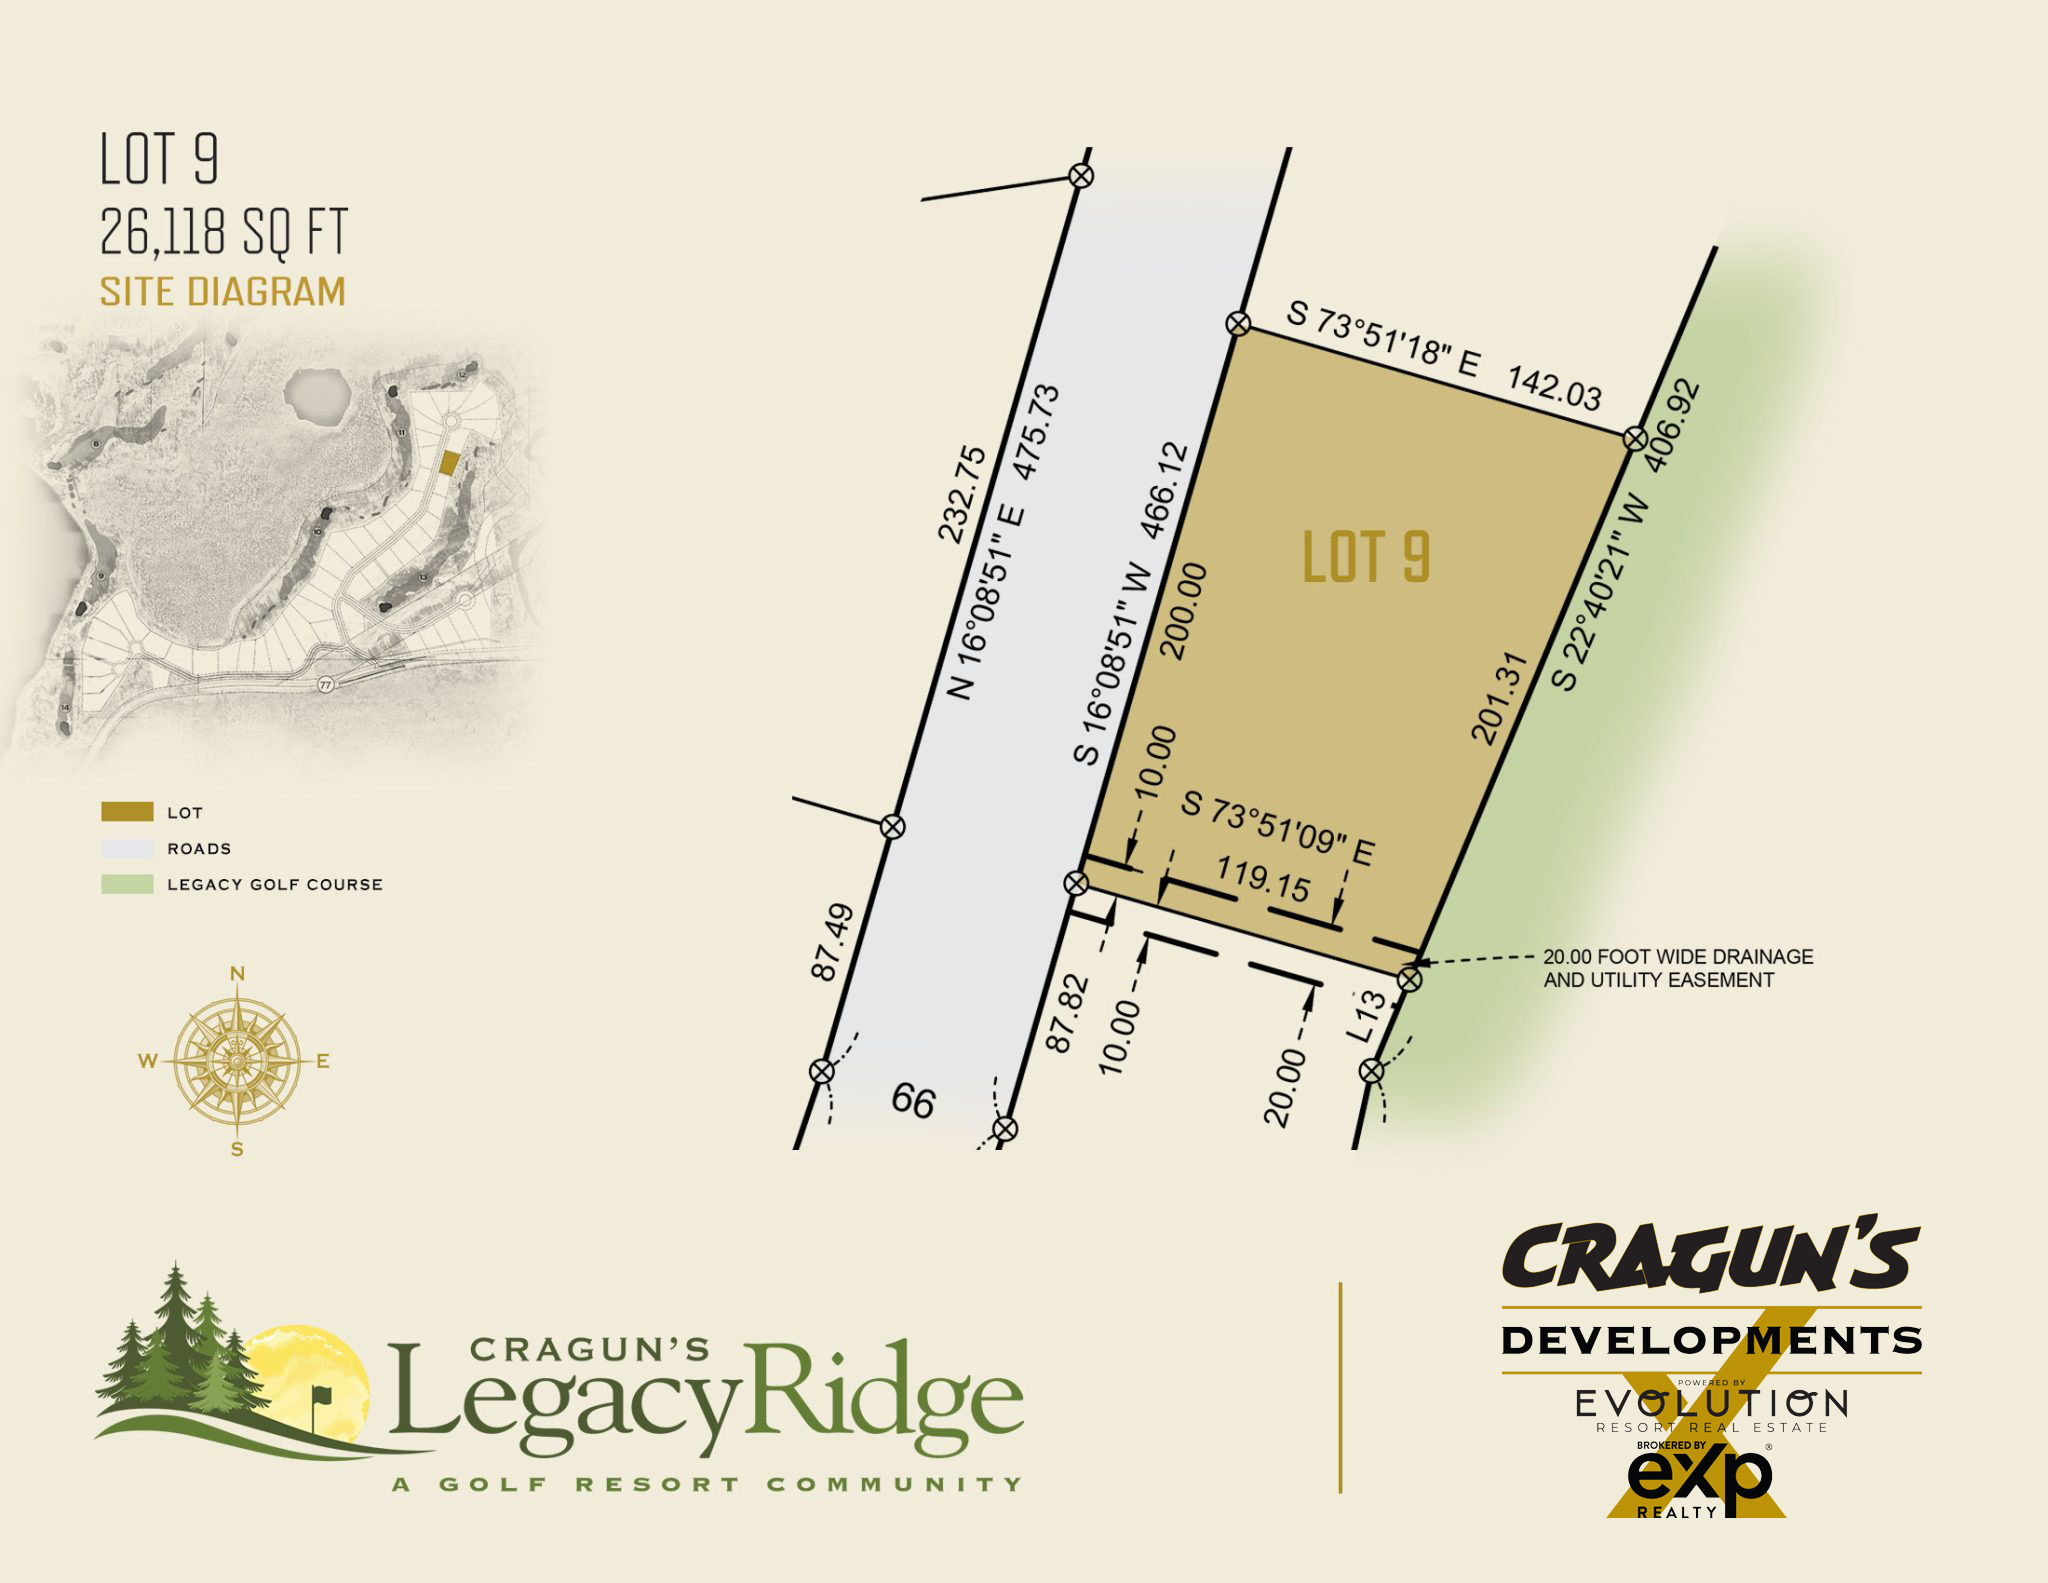 Legacy Ridge Lot 9 at Cragun's Developments in Brainerd, MN